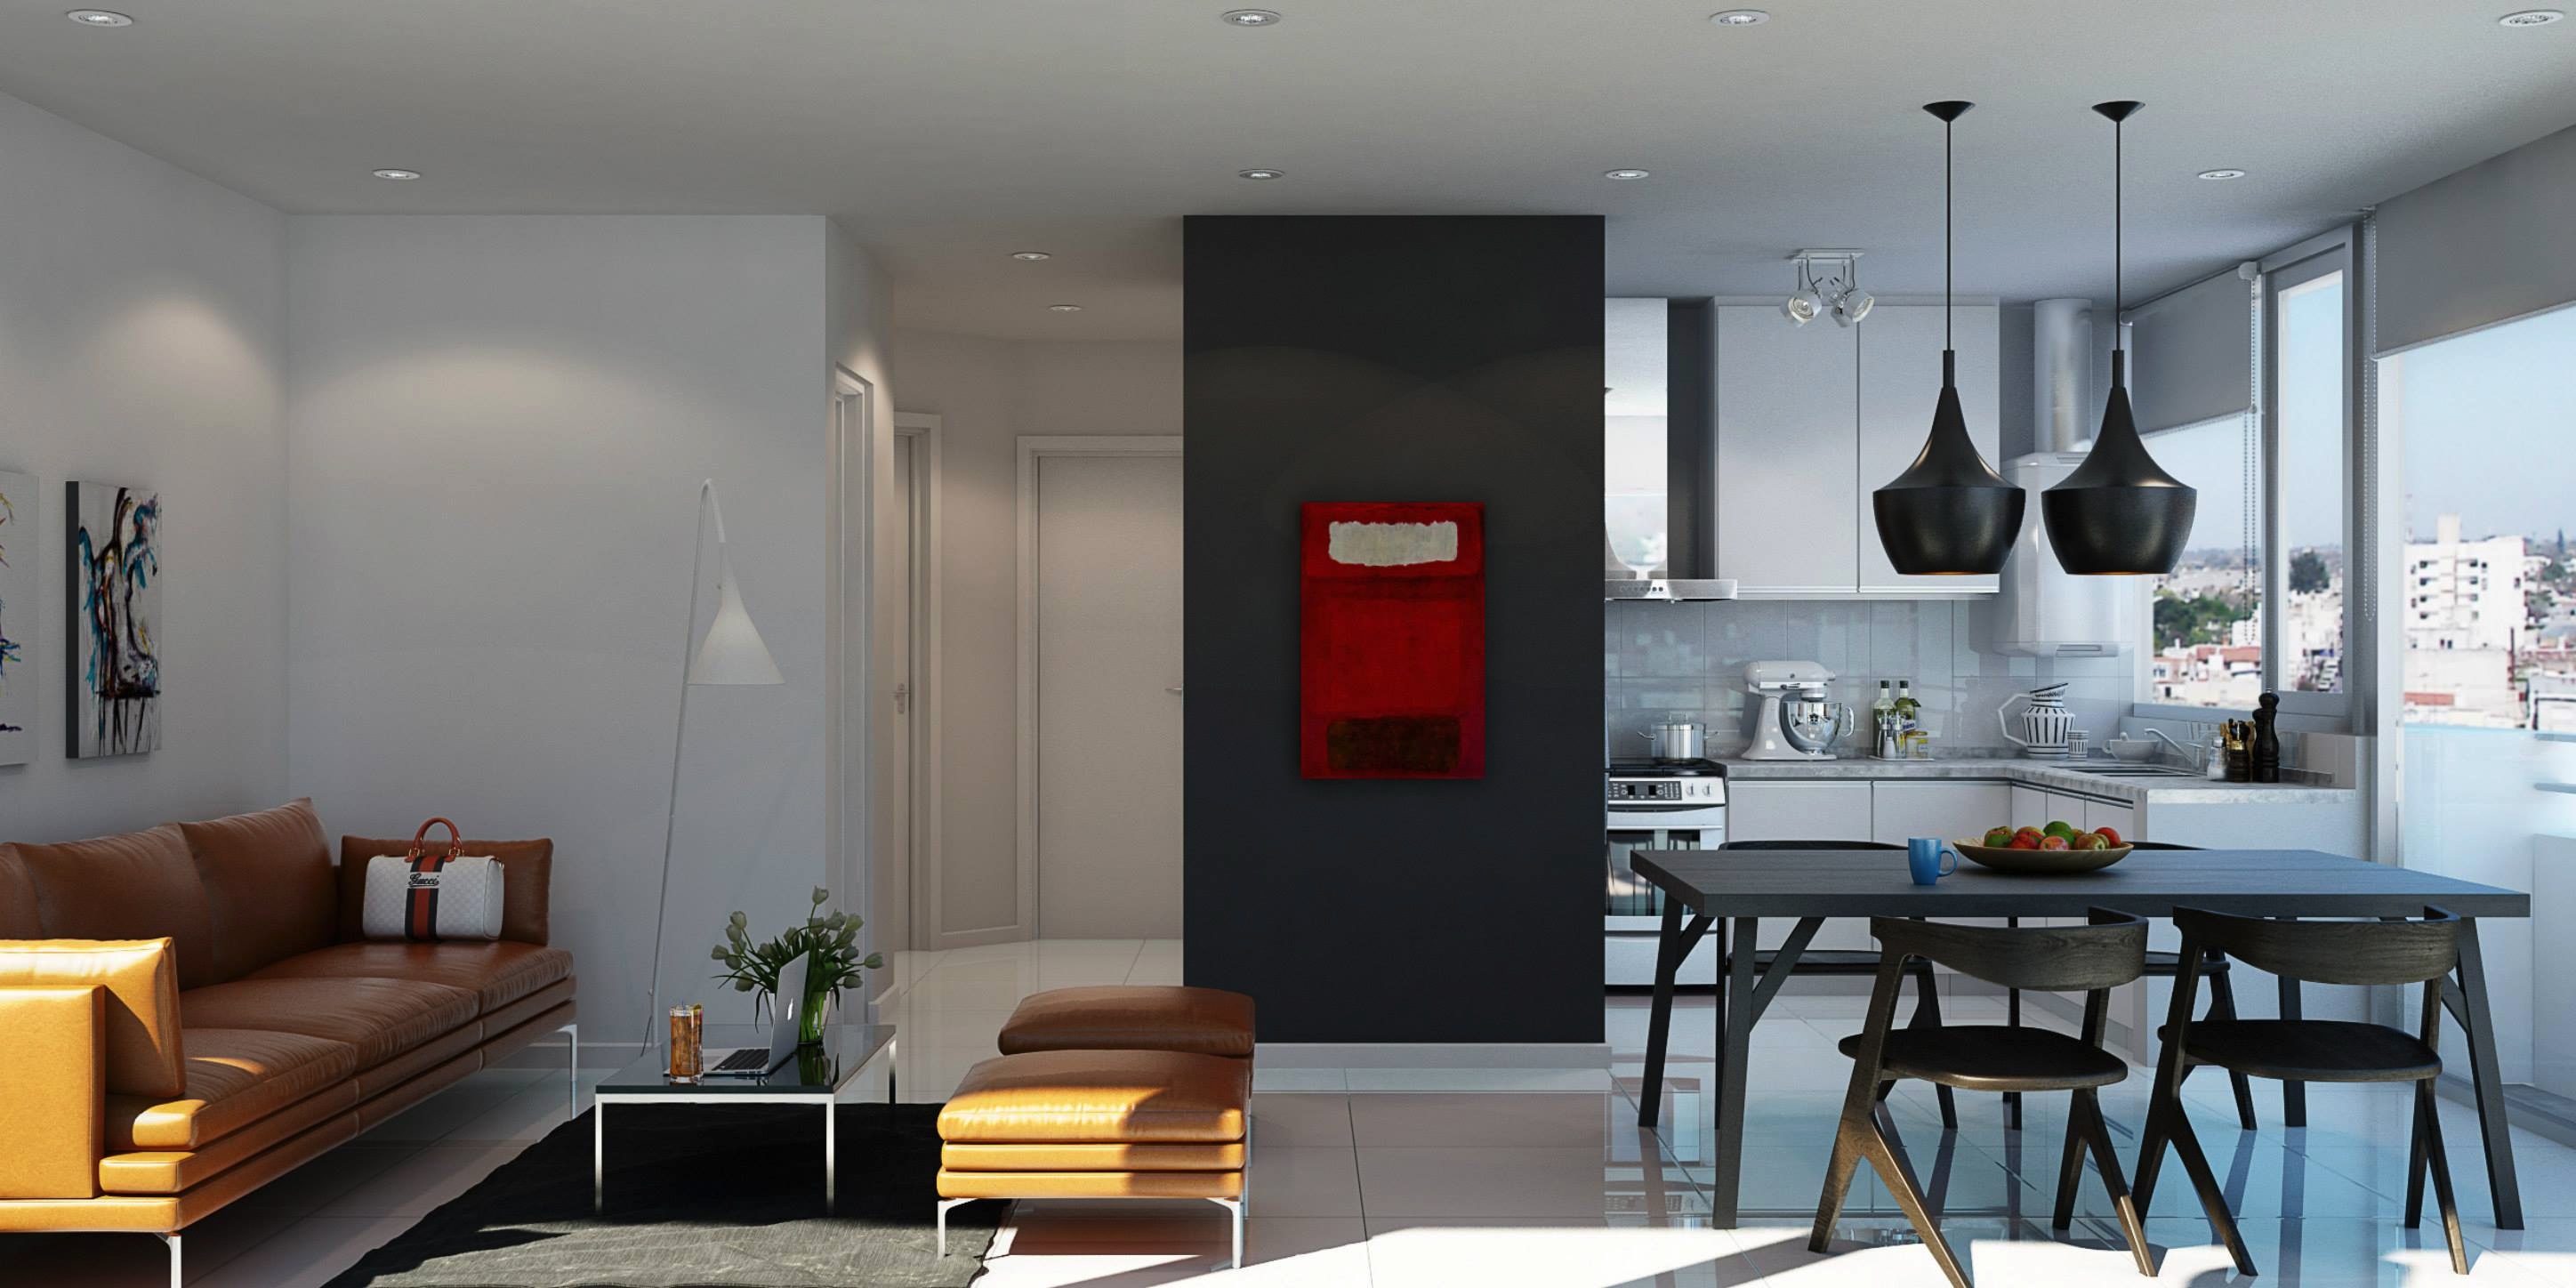 23 Open Concept Apartment Interiors For Inspiration,Graphic Design Jobs Jacksonville Fl